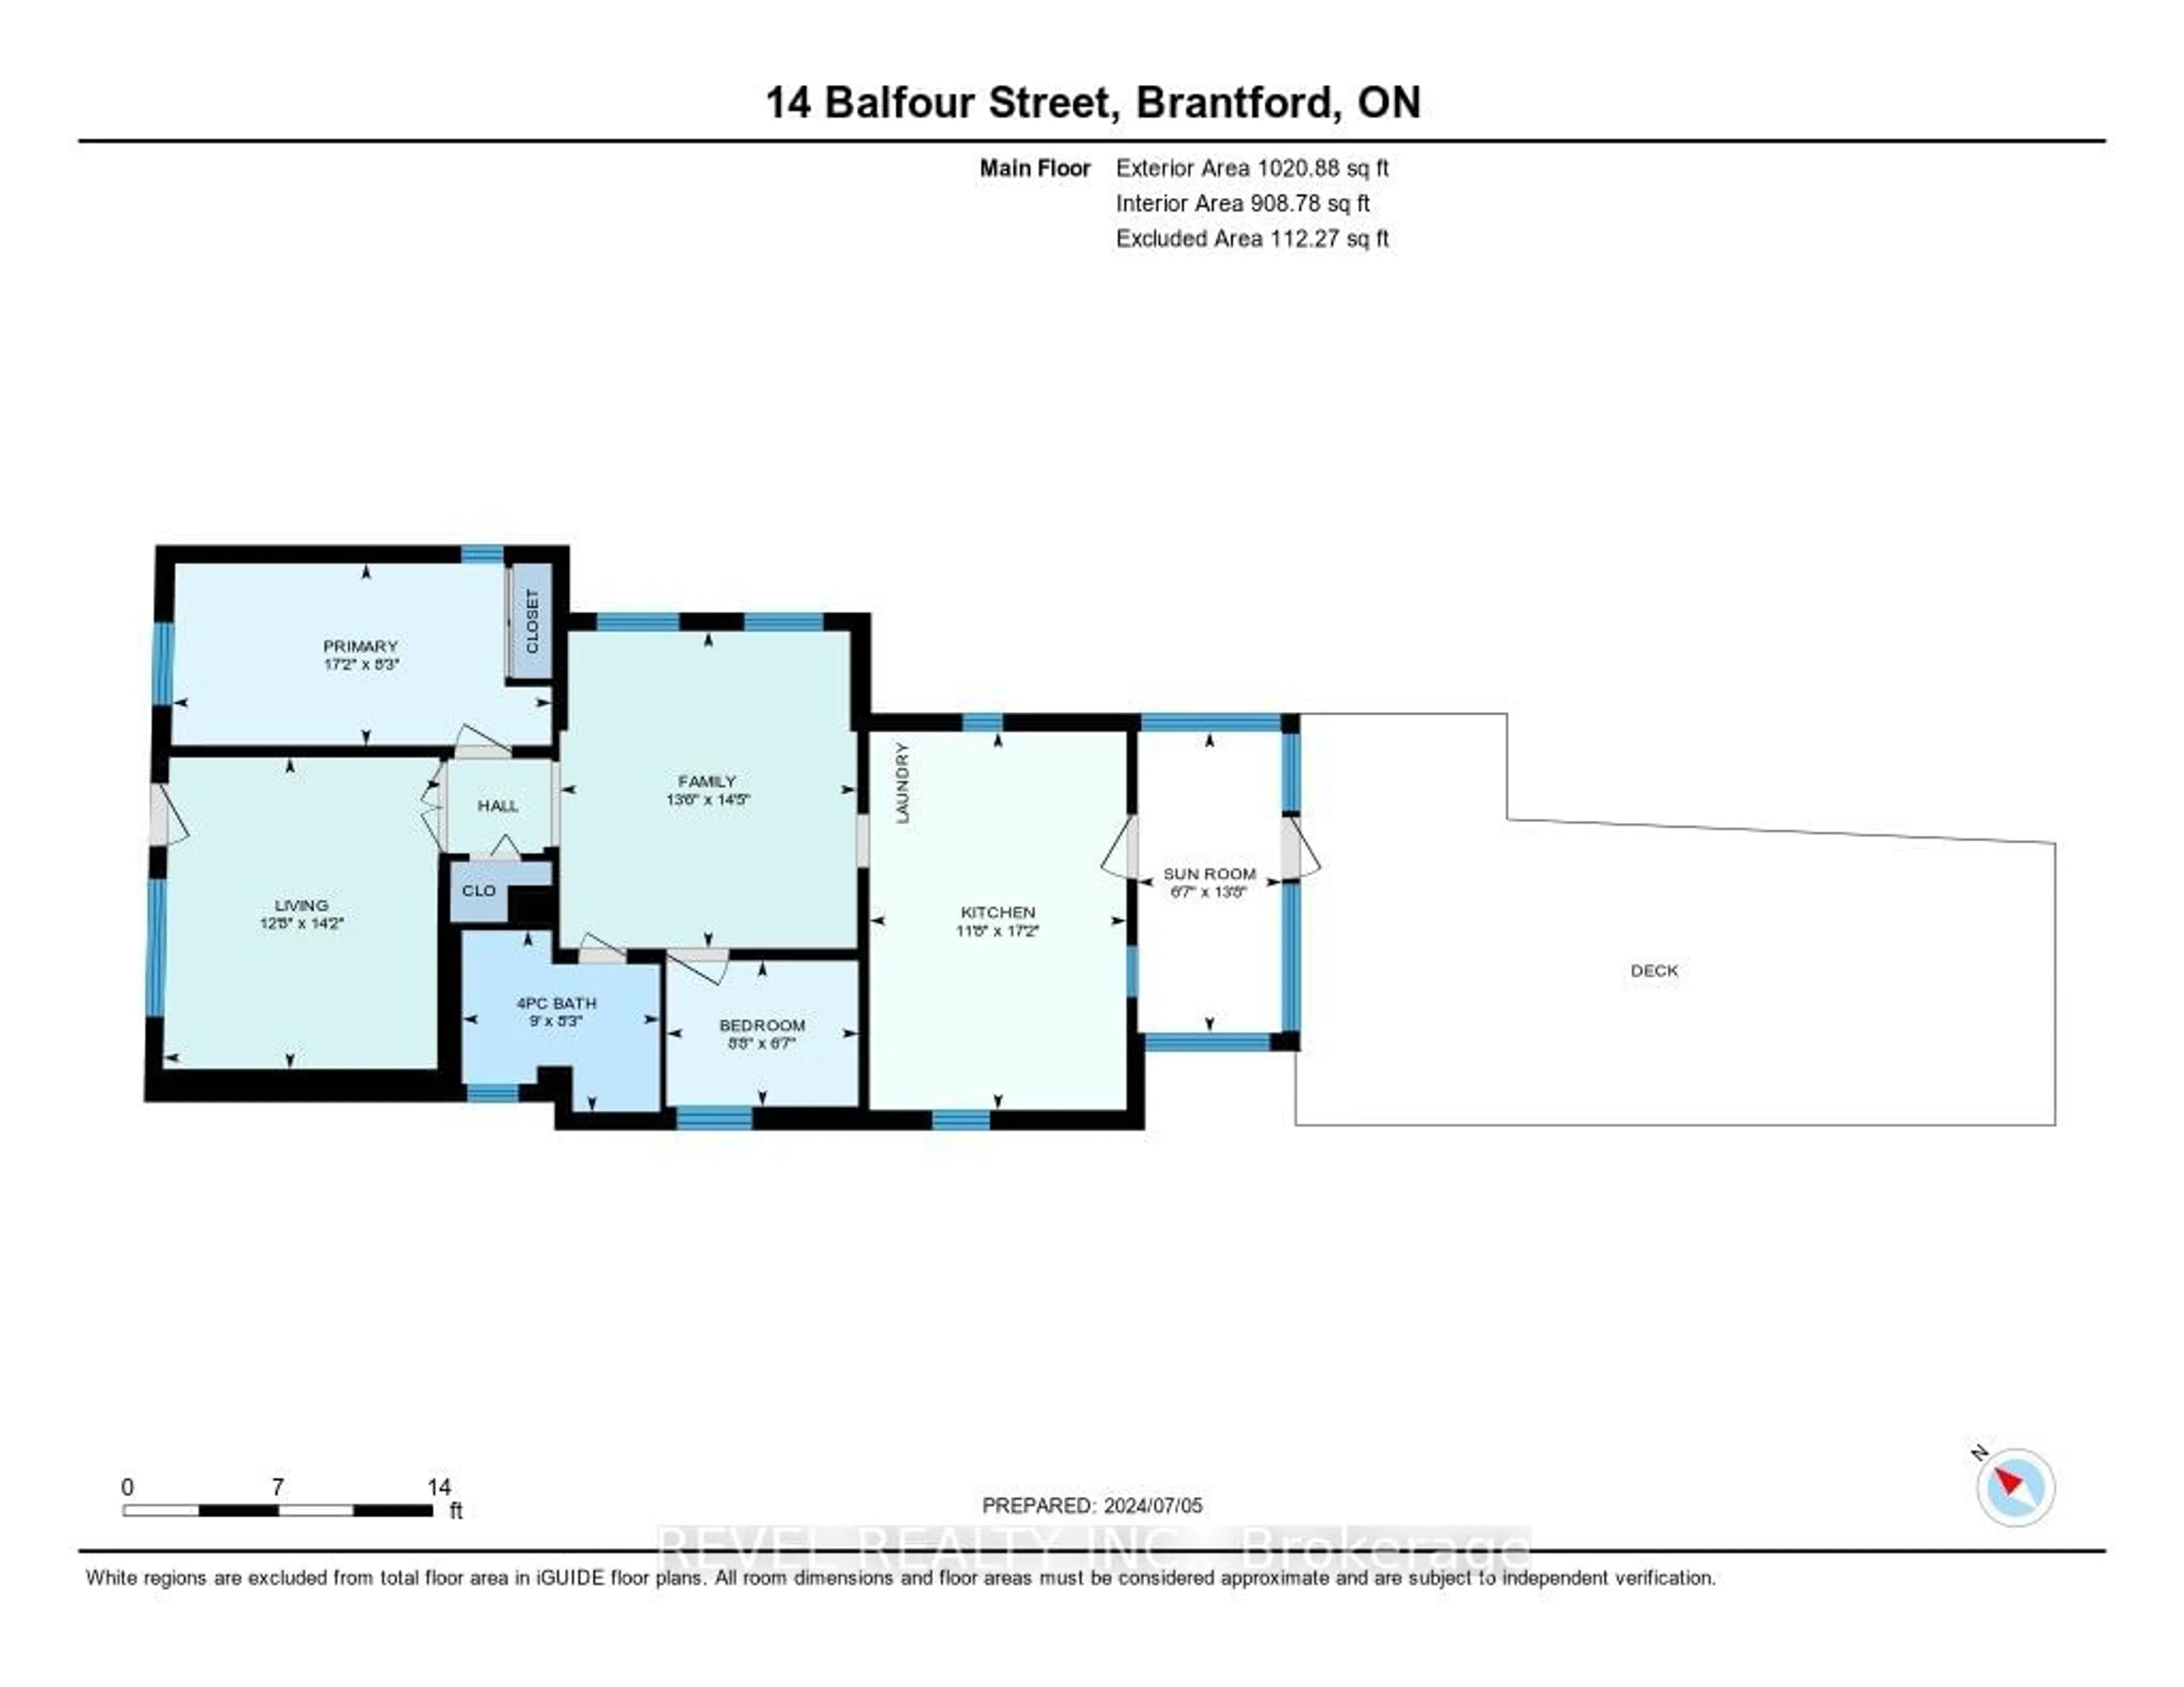 Floor plan for 14 Balfour St, Brantford Ontario N3T 1J2